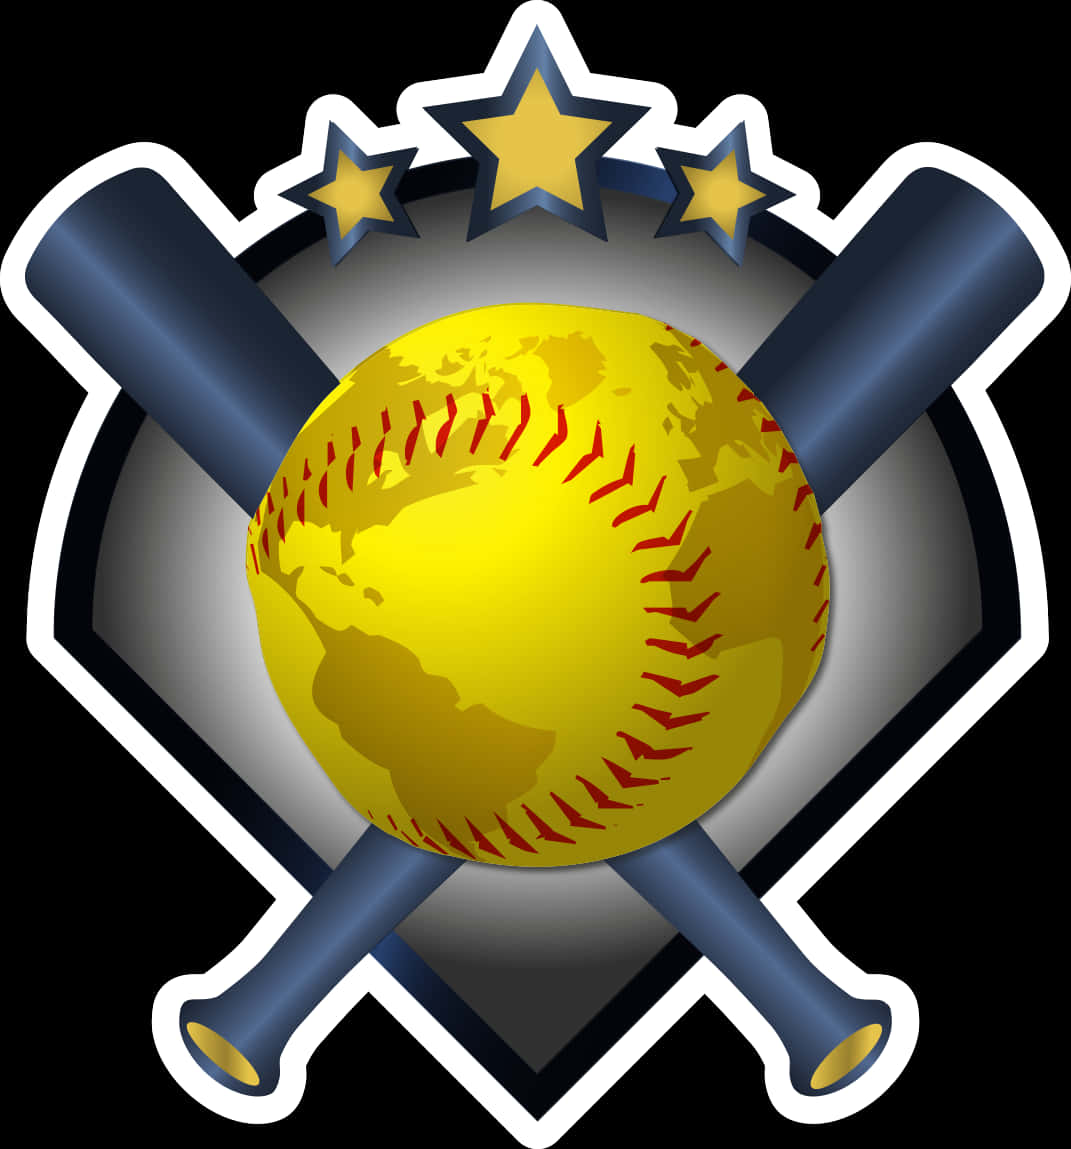 A Logo Of A Baseball And Bats